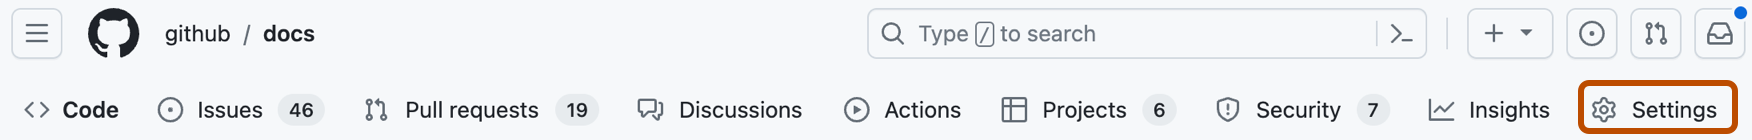 GitHub 리포지토리의 탭 스크린샷. "설정" 옵션이 진한 주황색으로 표시됩니다.